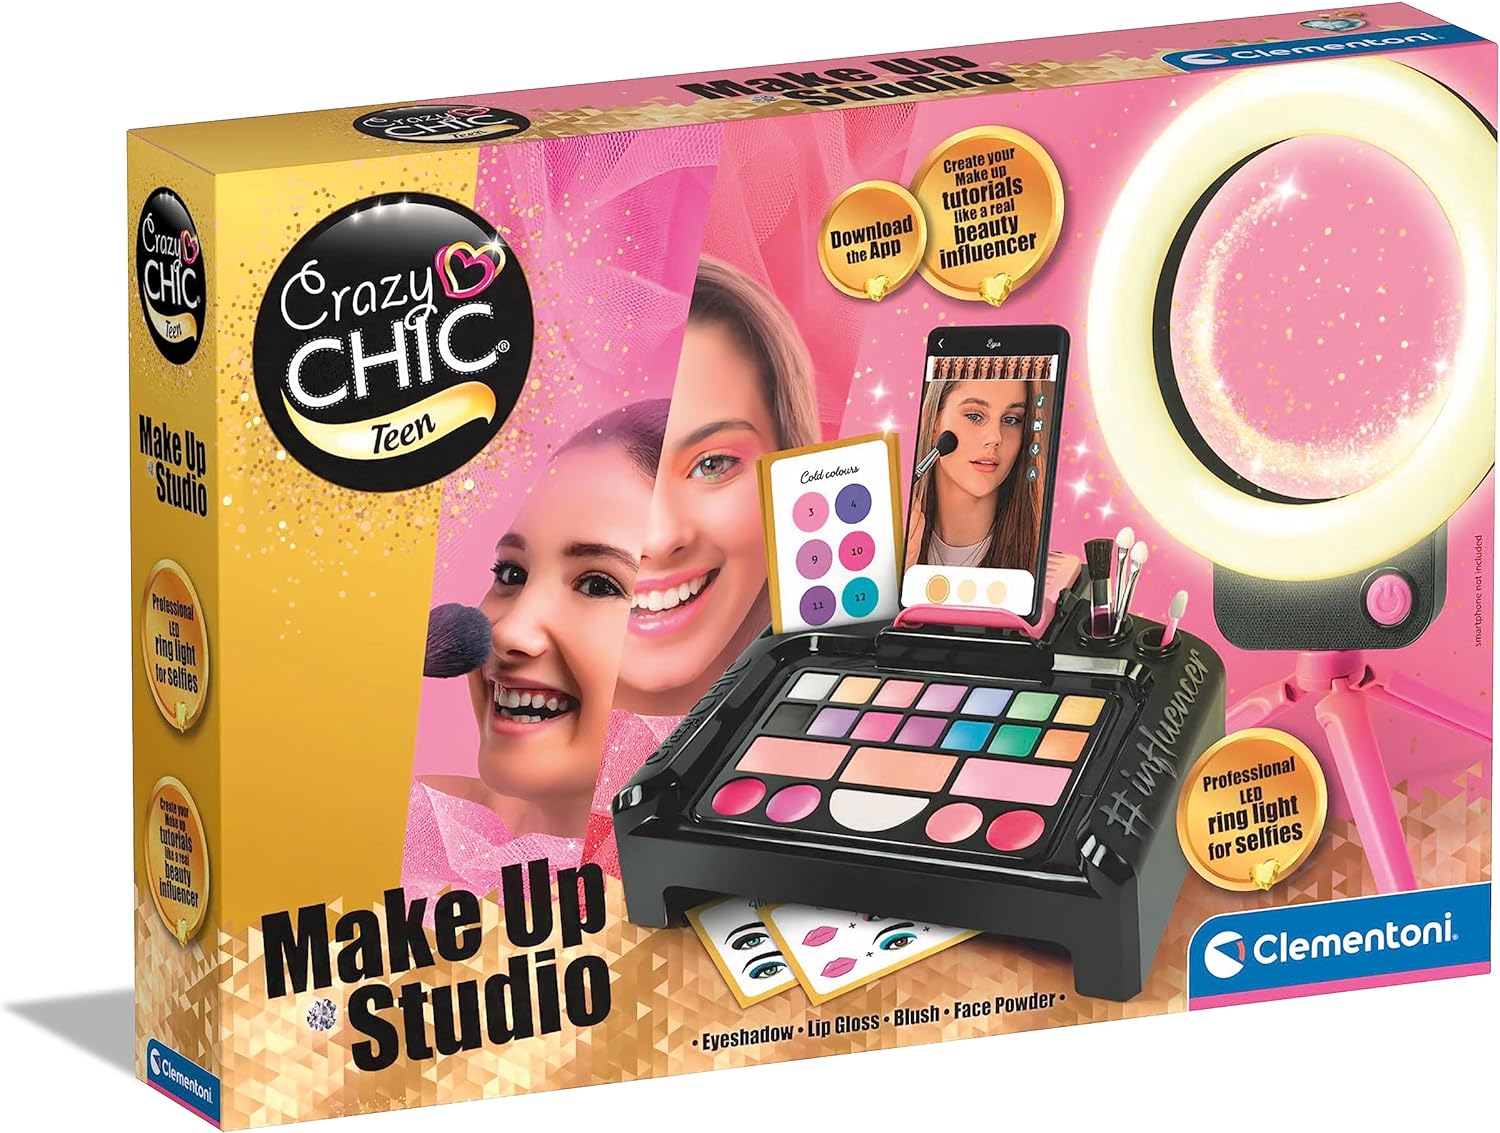 Crazy Chic Teen Make Up Studio